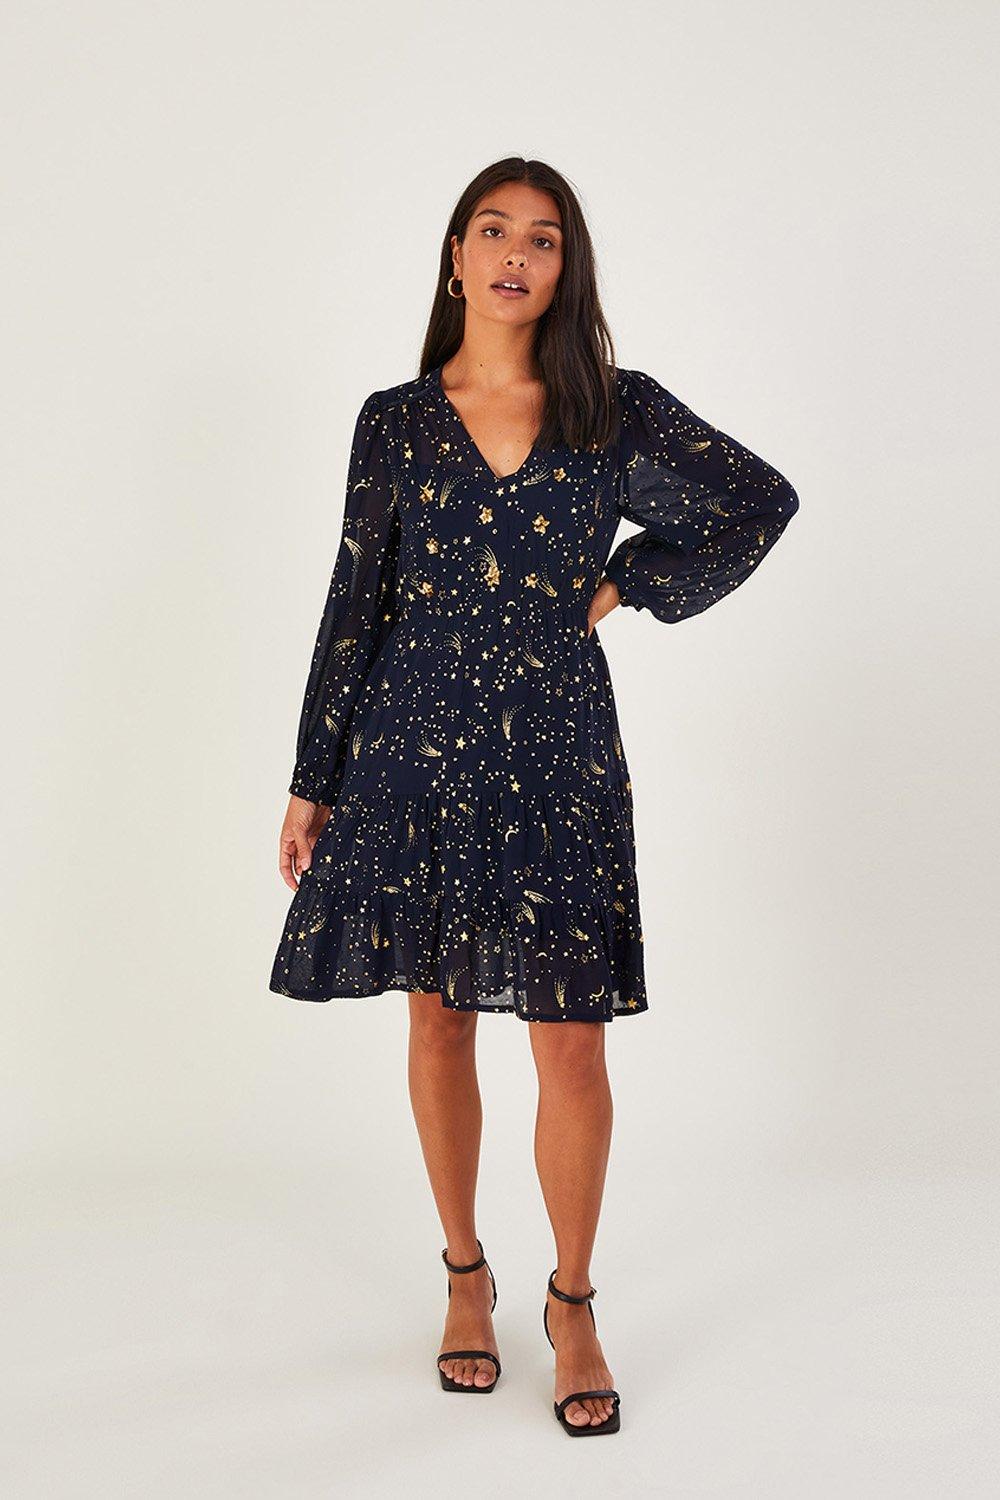 'Constella' Foil Sequin Dress